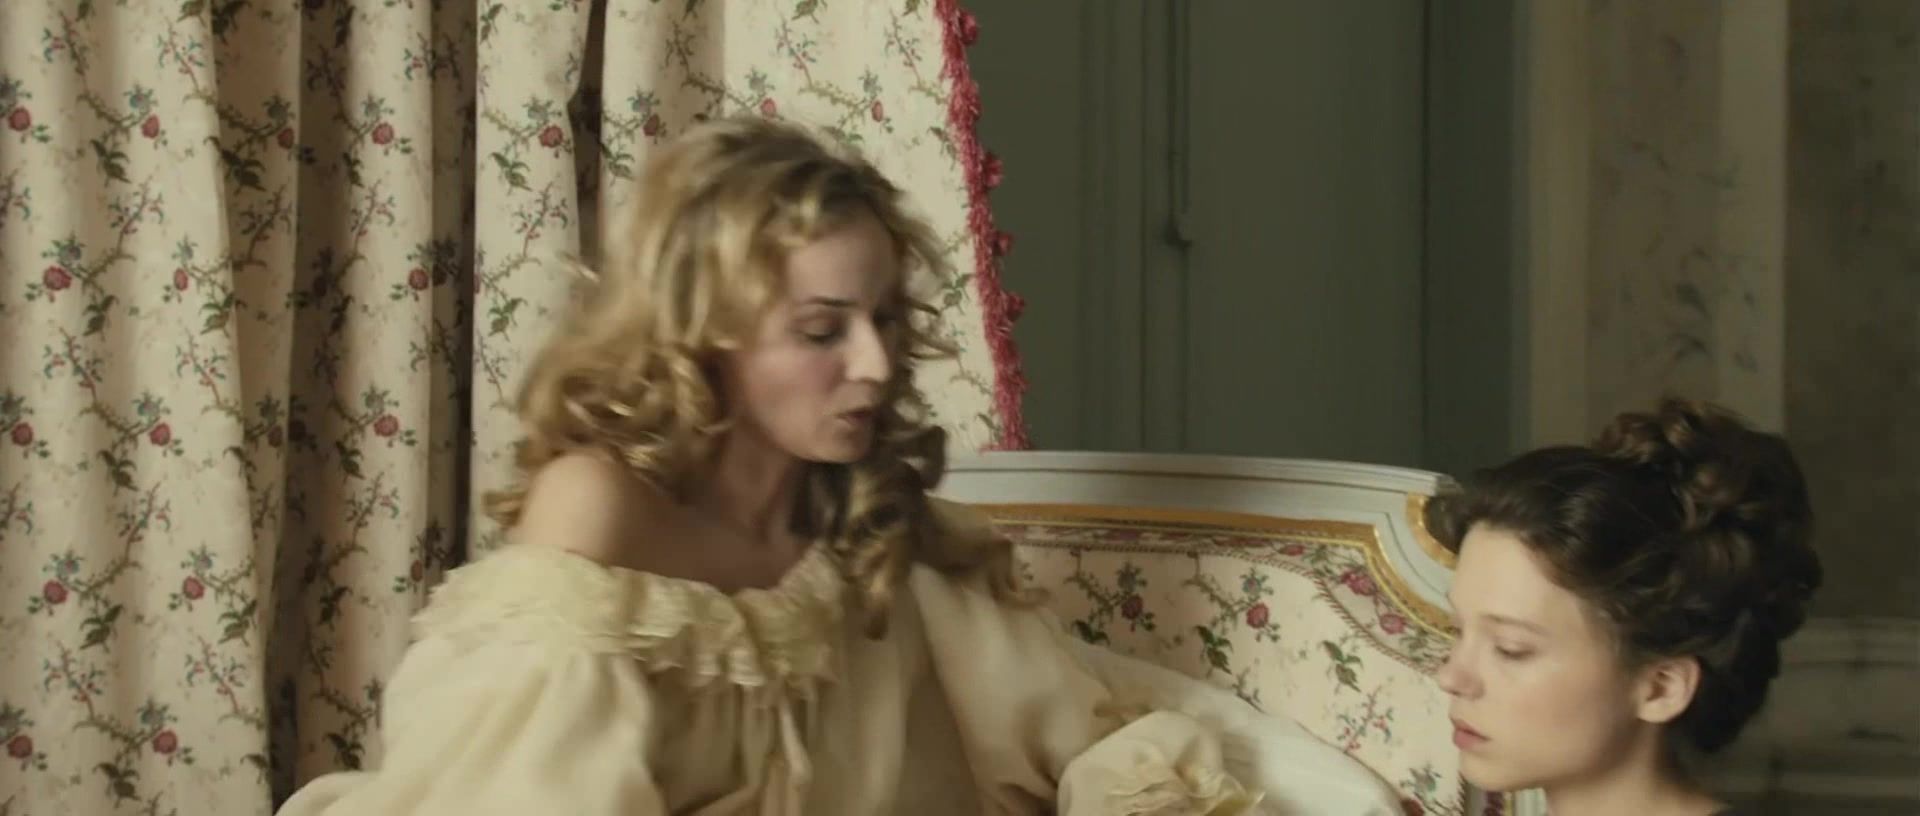 Raw Hot actress Virginie Ledoyen - Farewell My Queen (2012) Putaria - 1